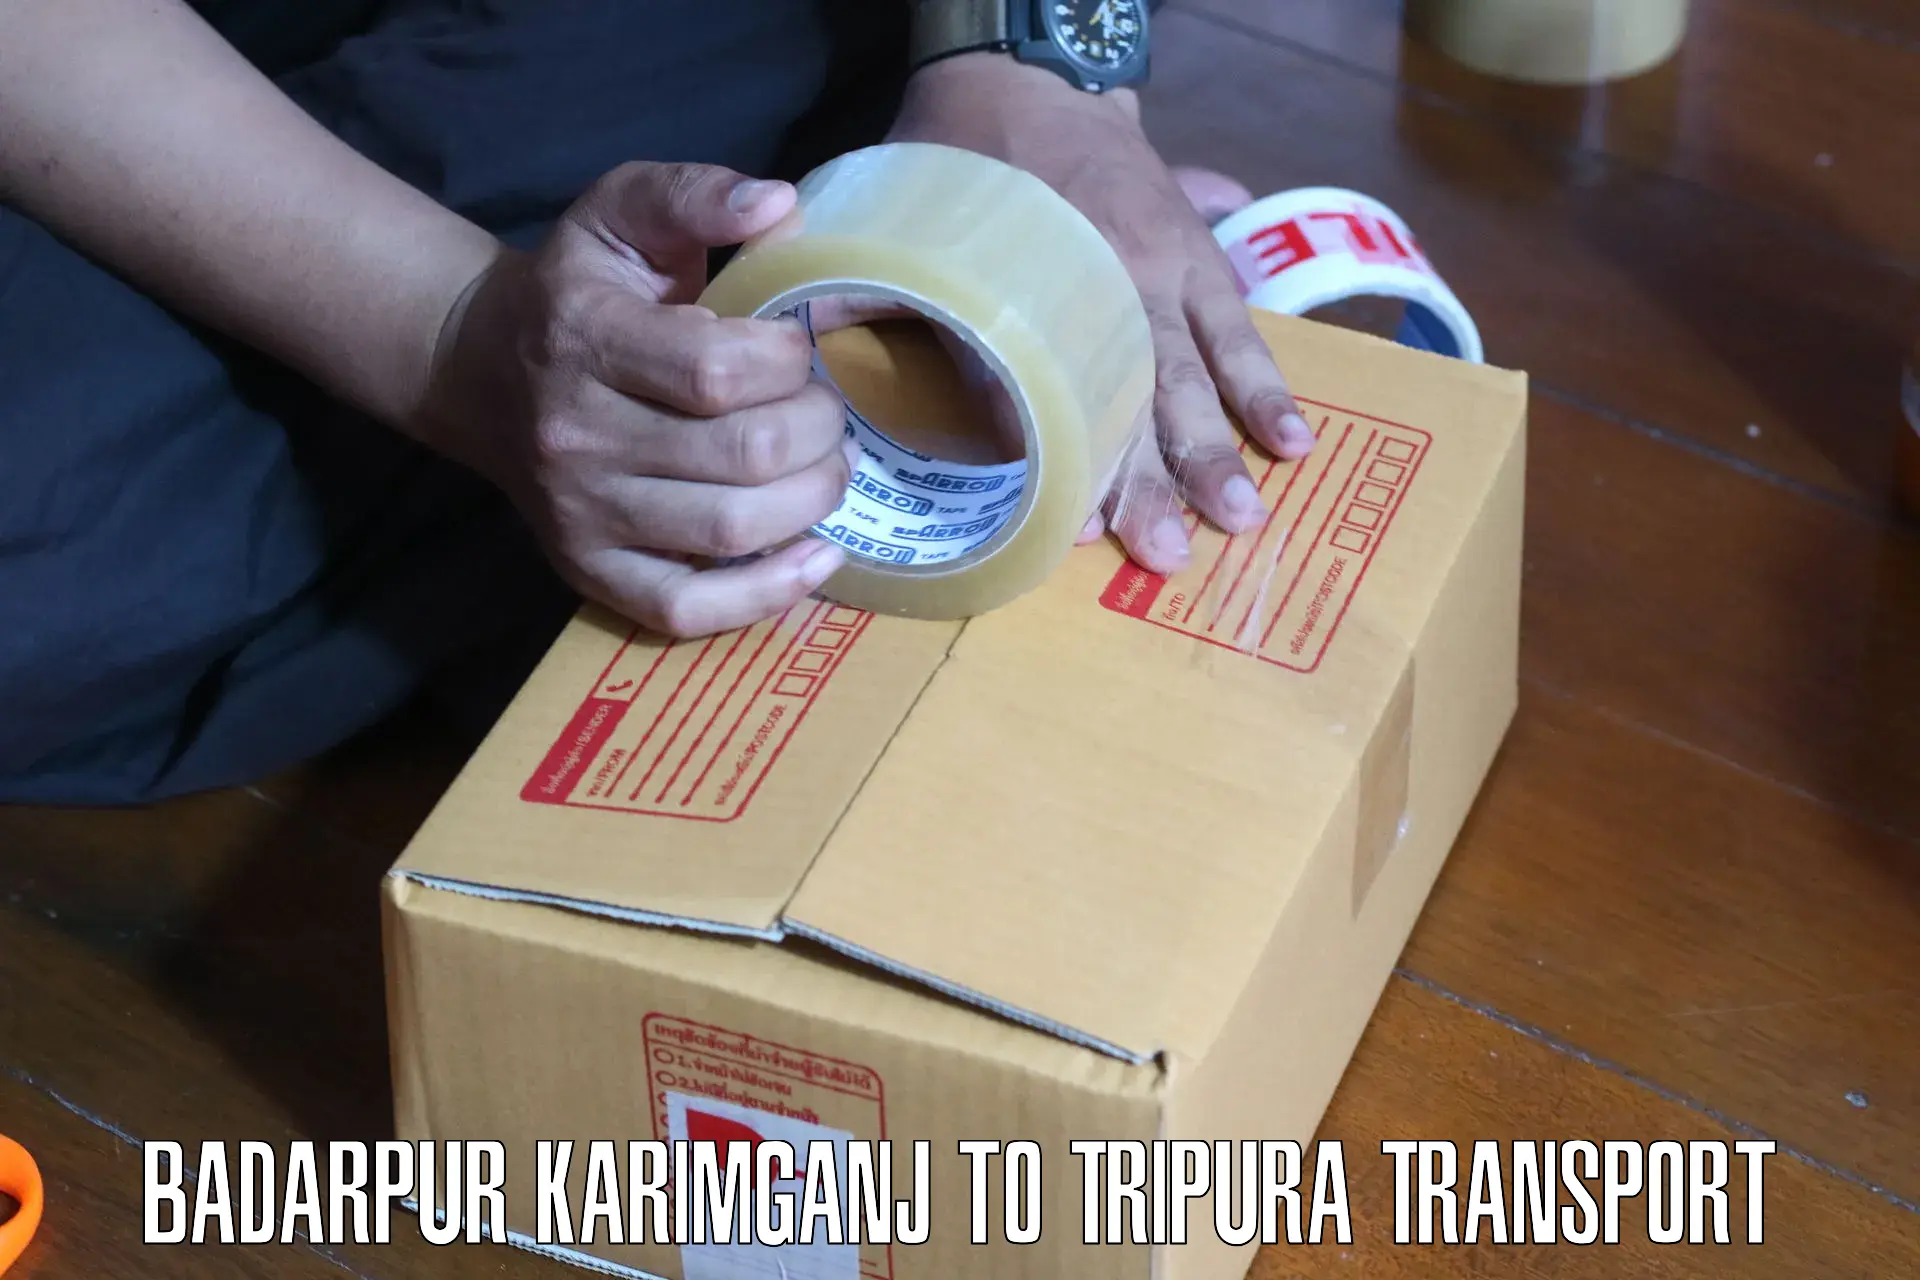 Furniture transport service Badarpur Karimganj to Udaipur Tripura